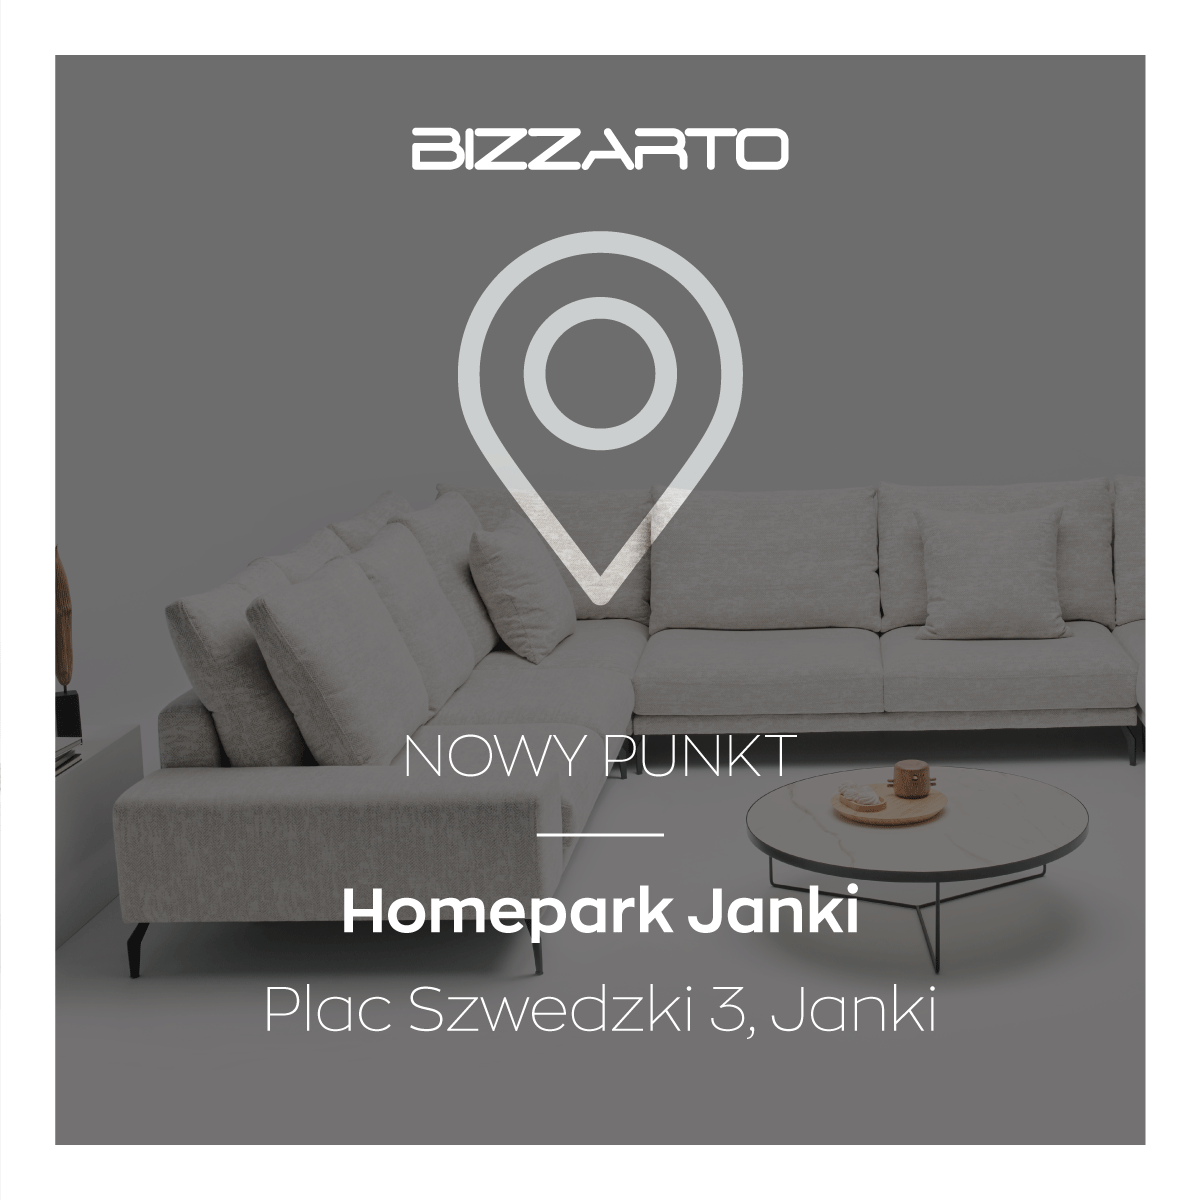 Homepark Janki - Bizzarto